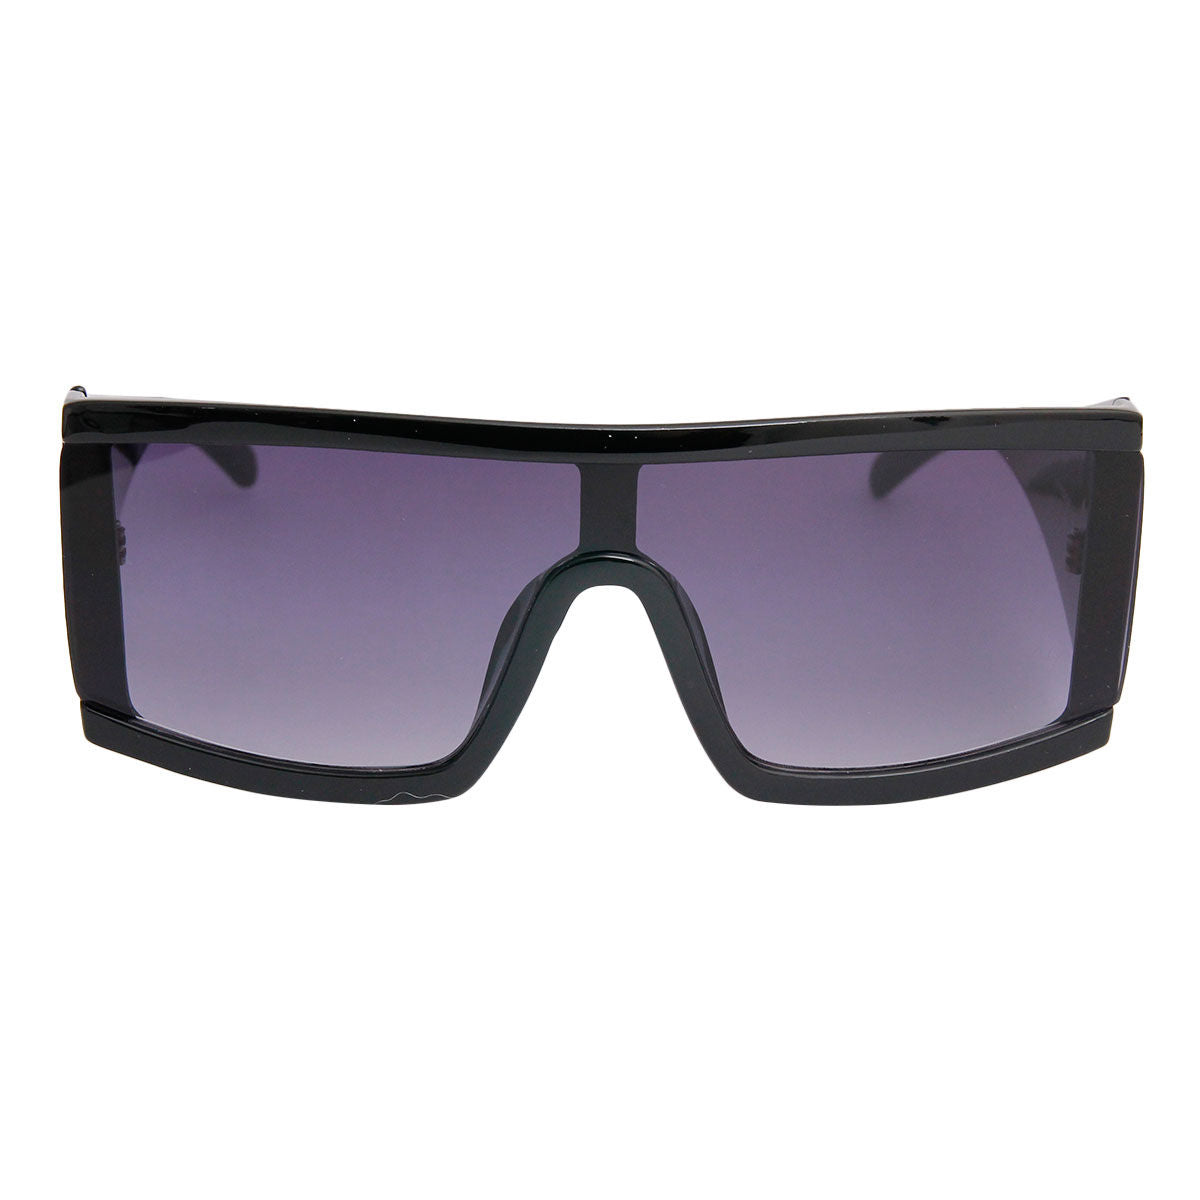 Black Celine Inspired Square Sunglasses